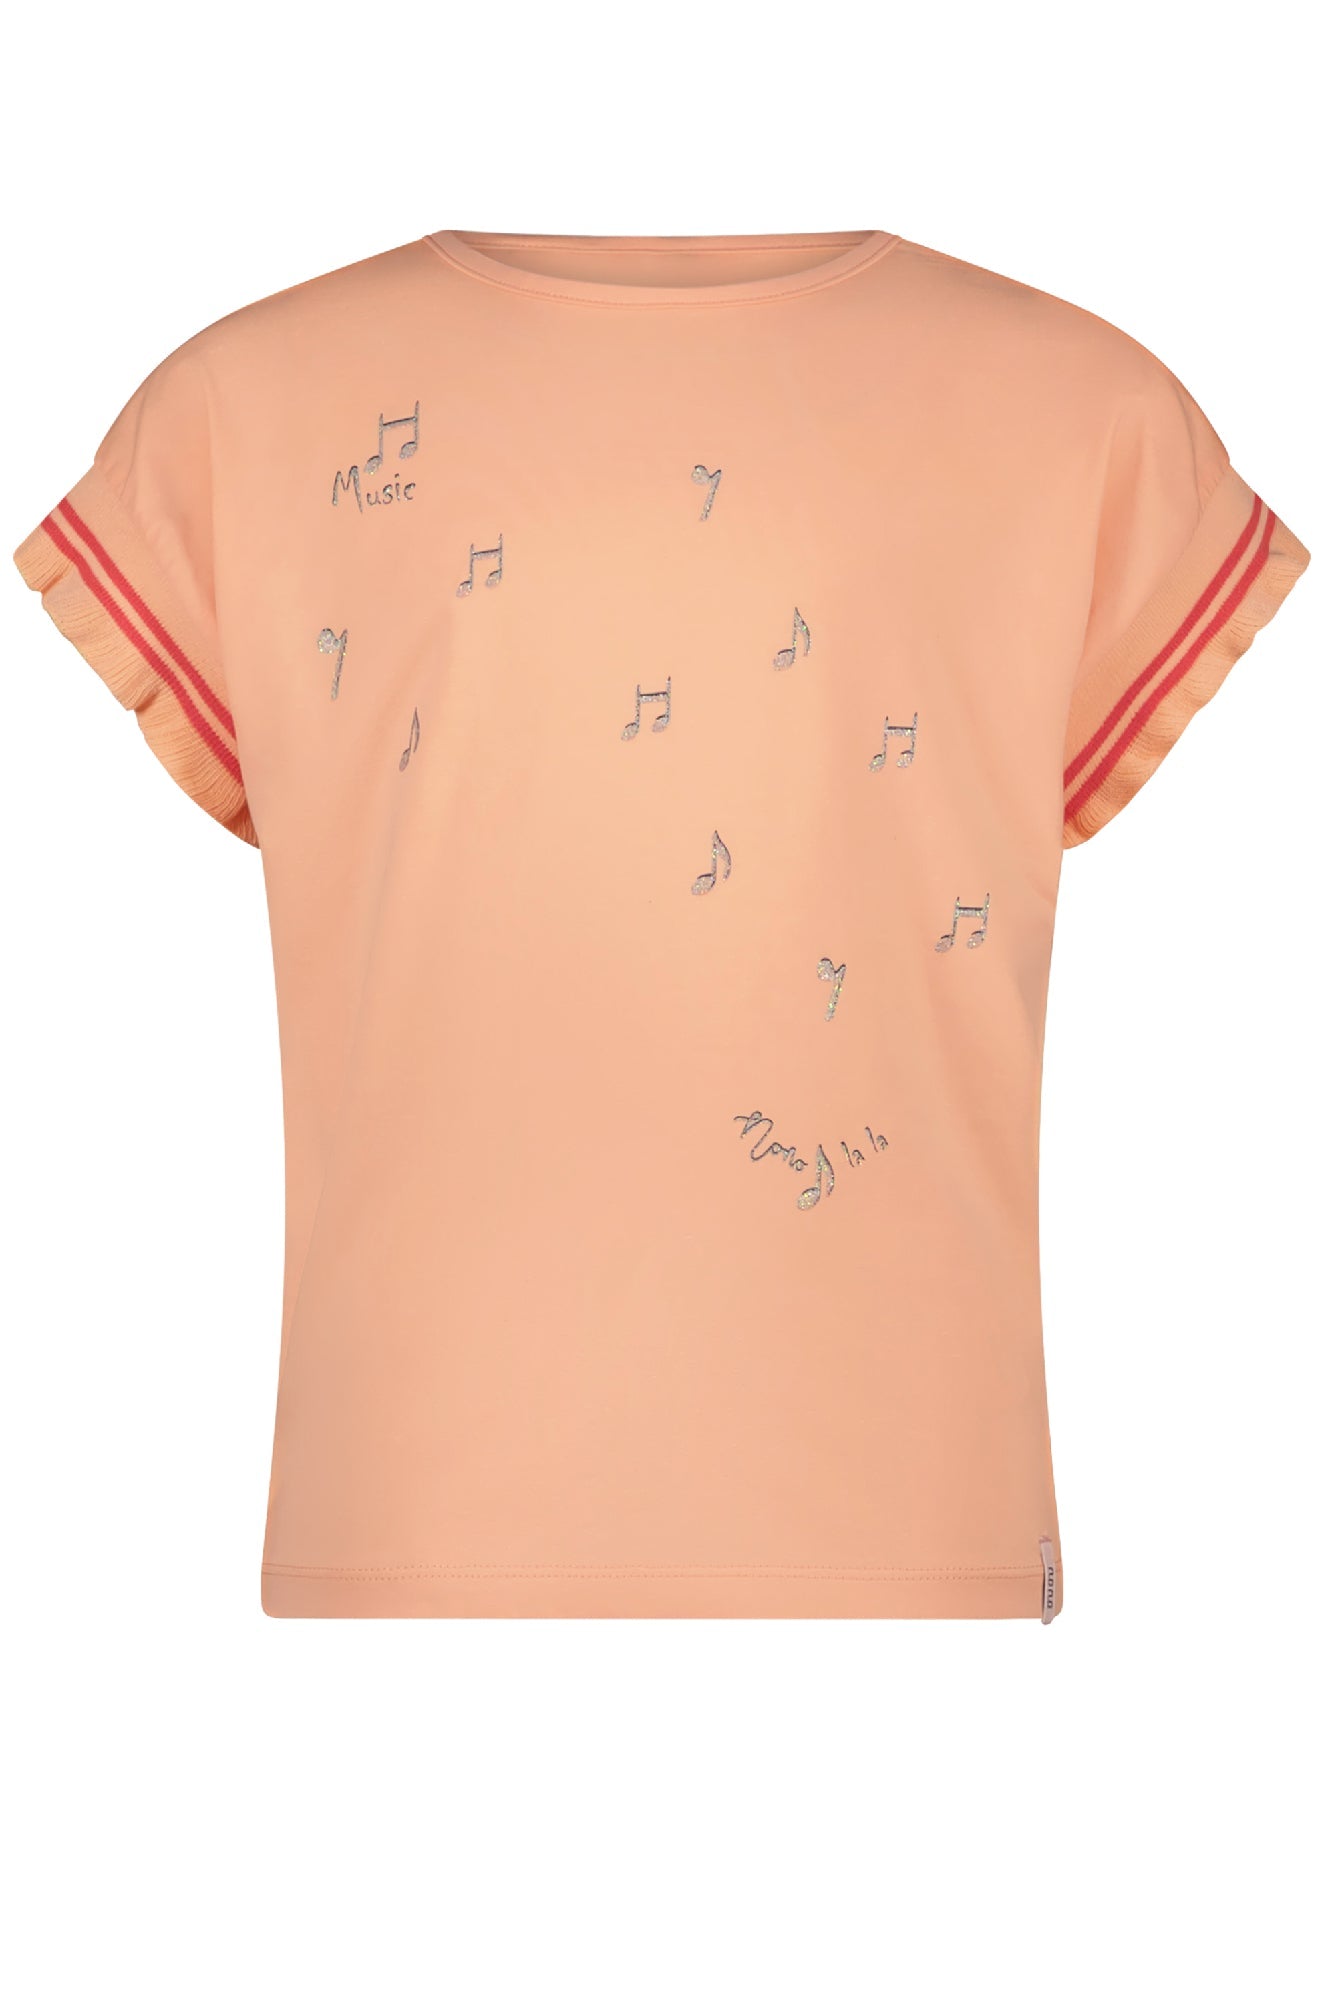 Meisjes Kanai music notes tshirt s/sl with ruffled rib at sleeve end van NoNo in de kleur Light Peach in maat 134-140.